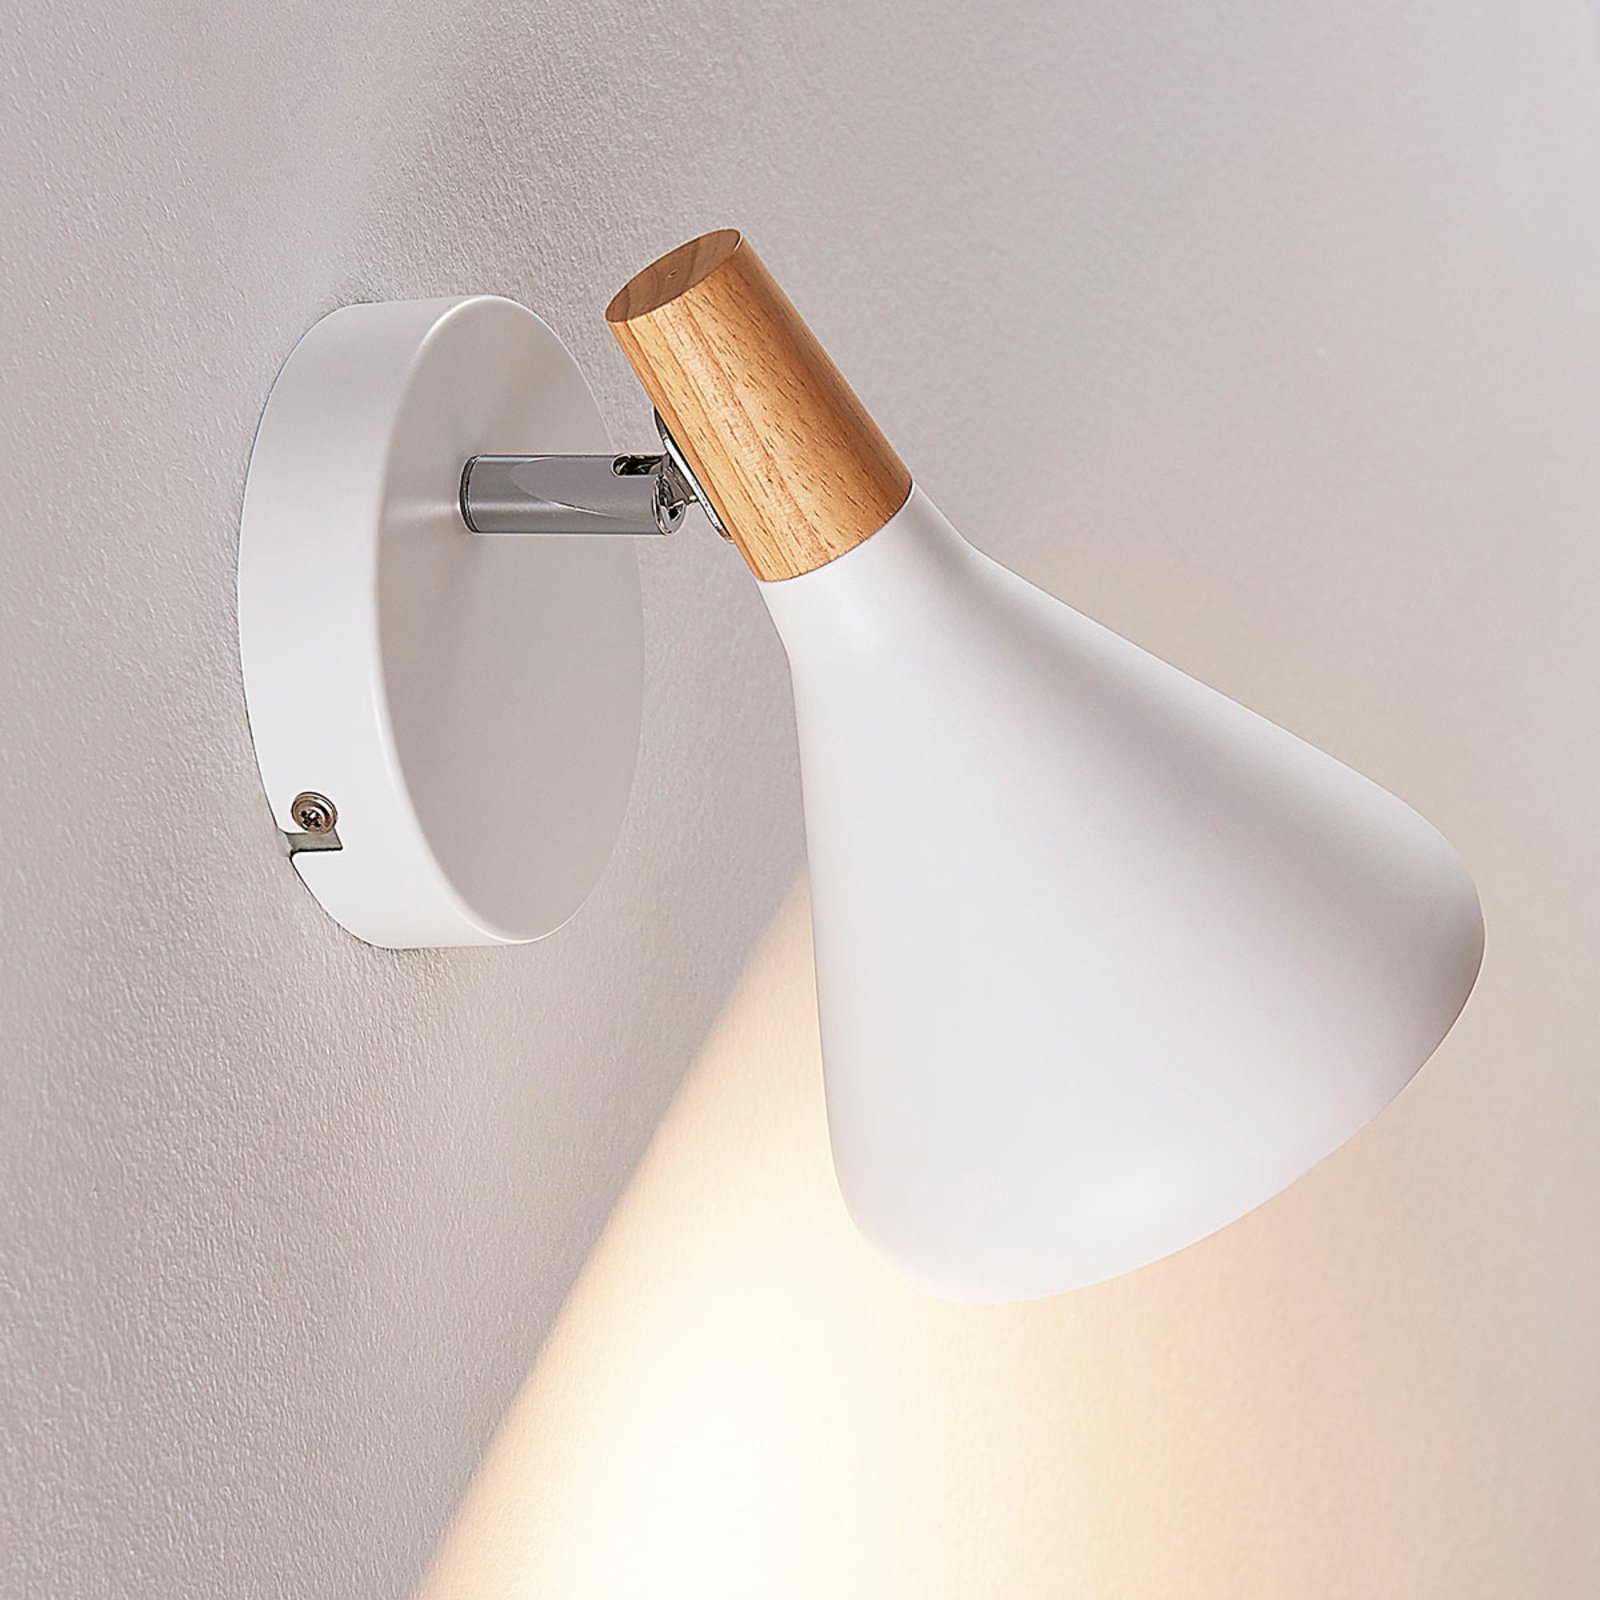 Arina wall light in white, 1-bulb